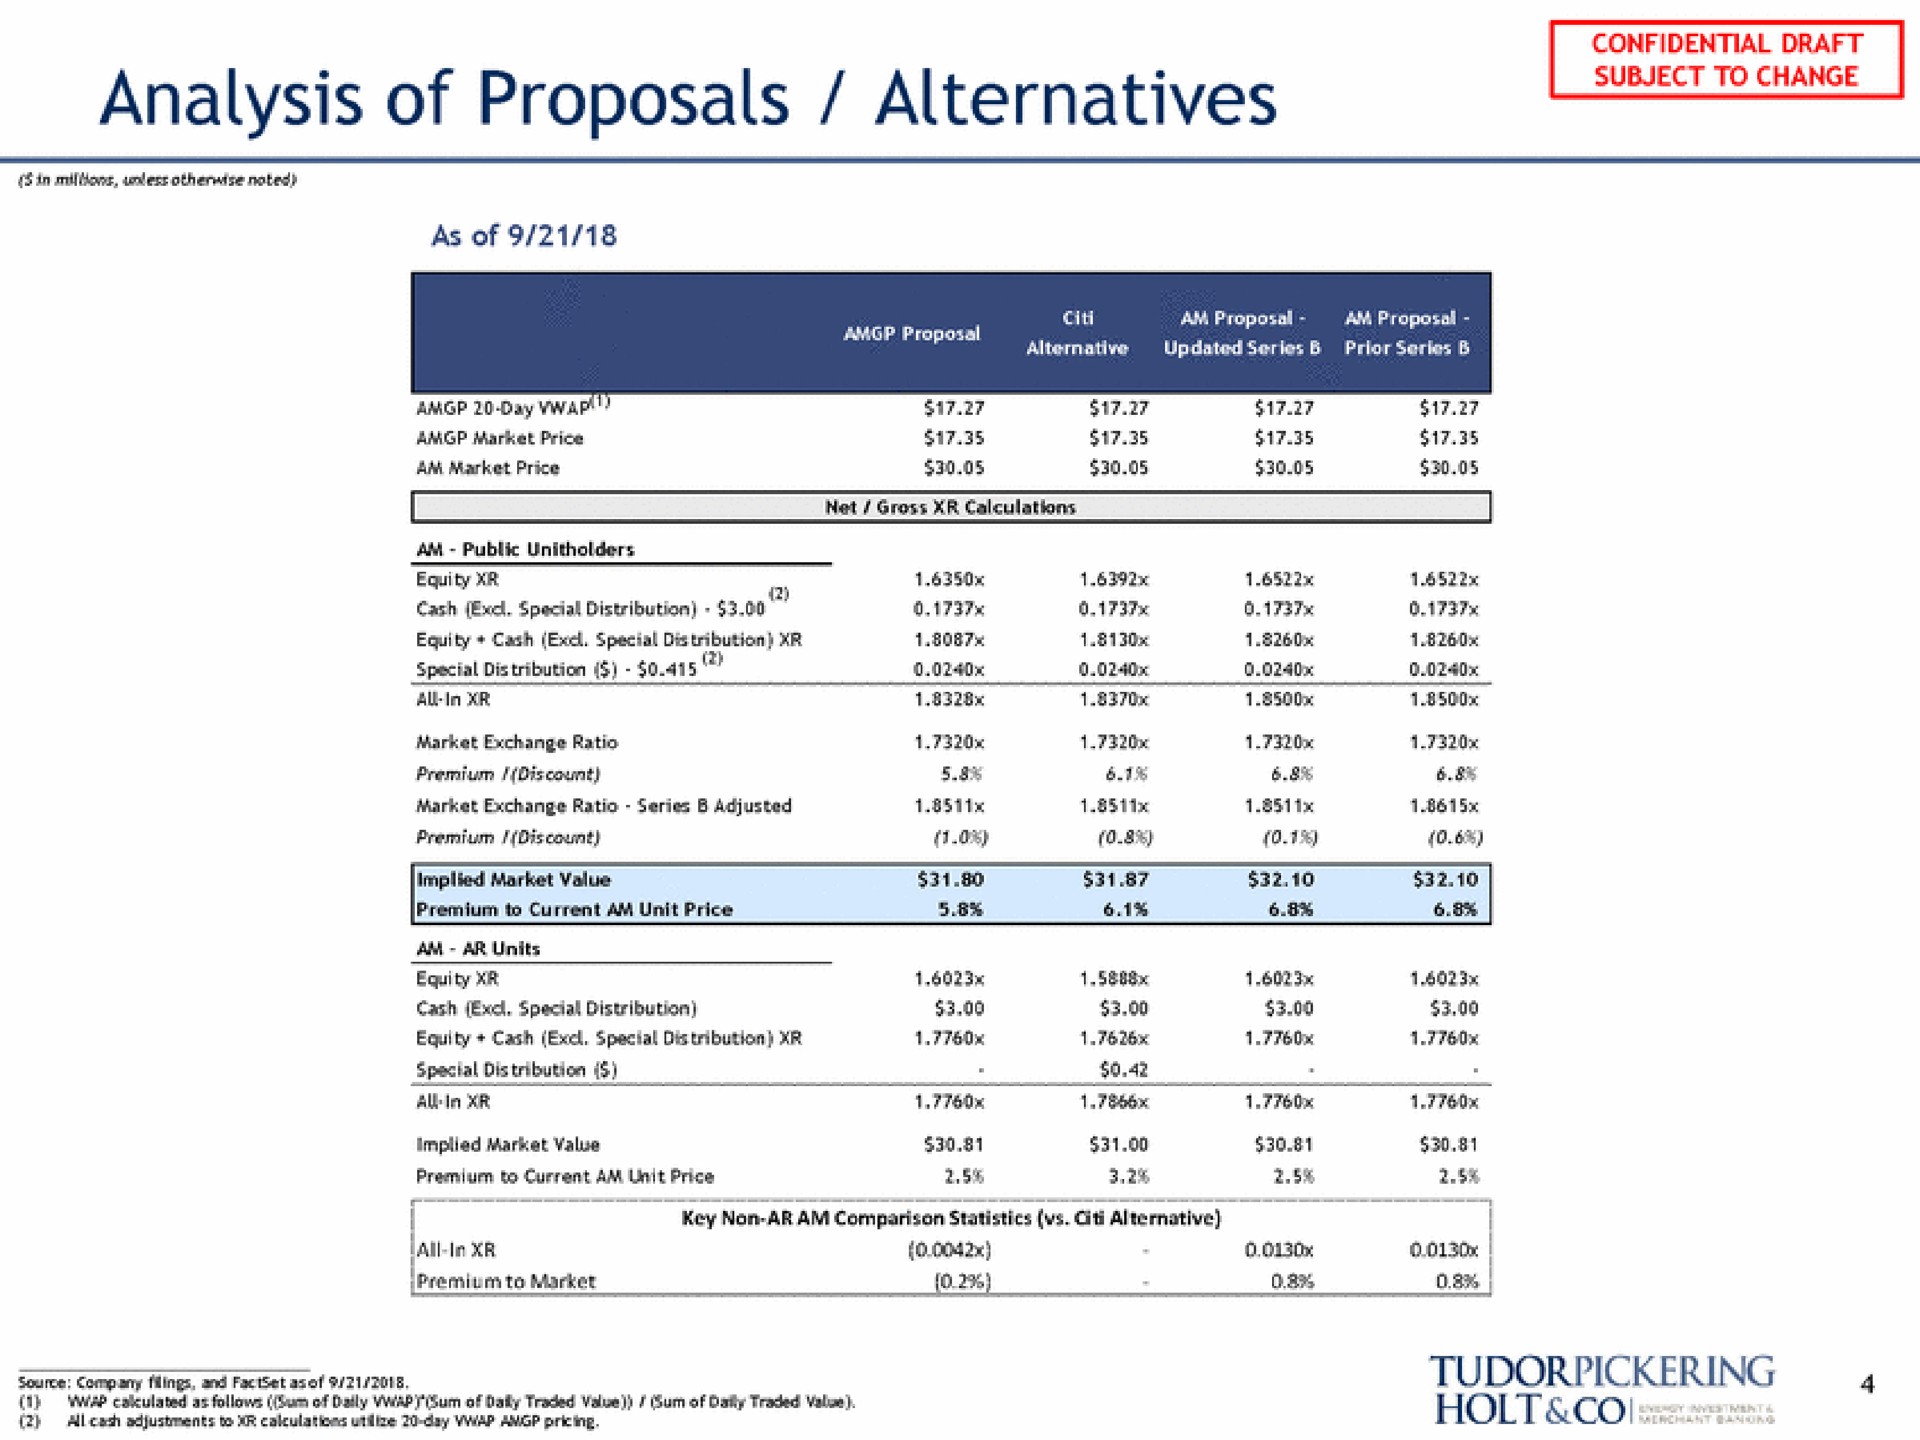 analysis of proposals alternatives | Tudor, Pickering, Holt & Co